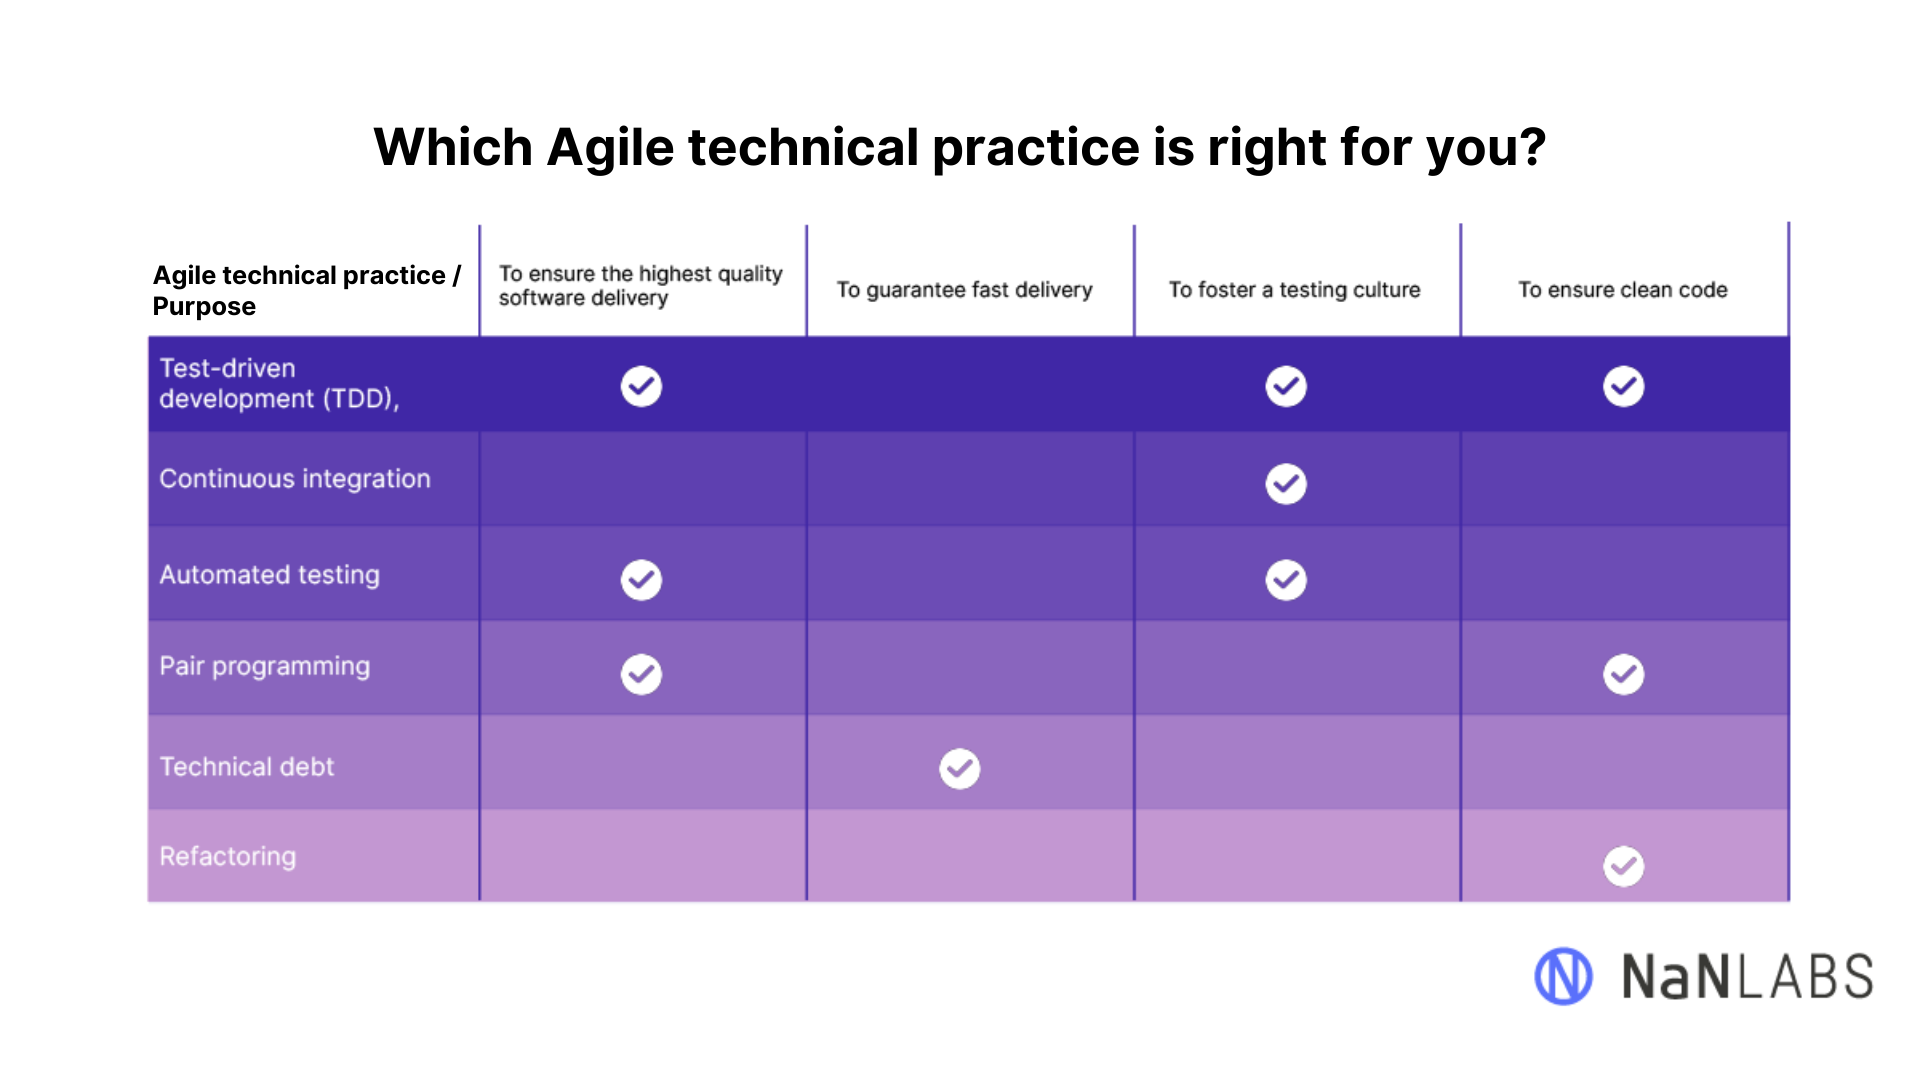 Agile technical practices - purposes